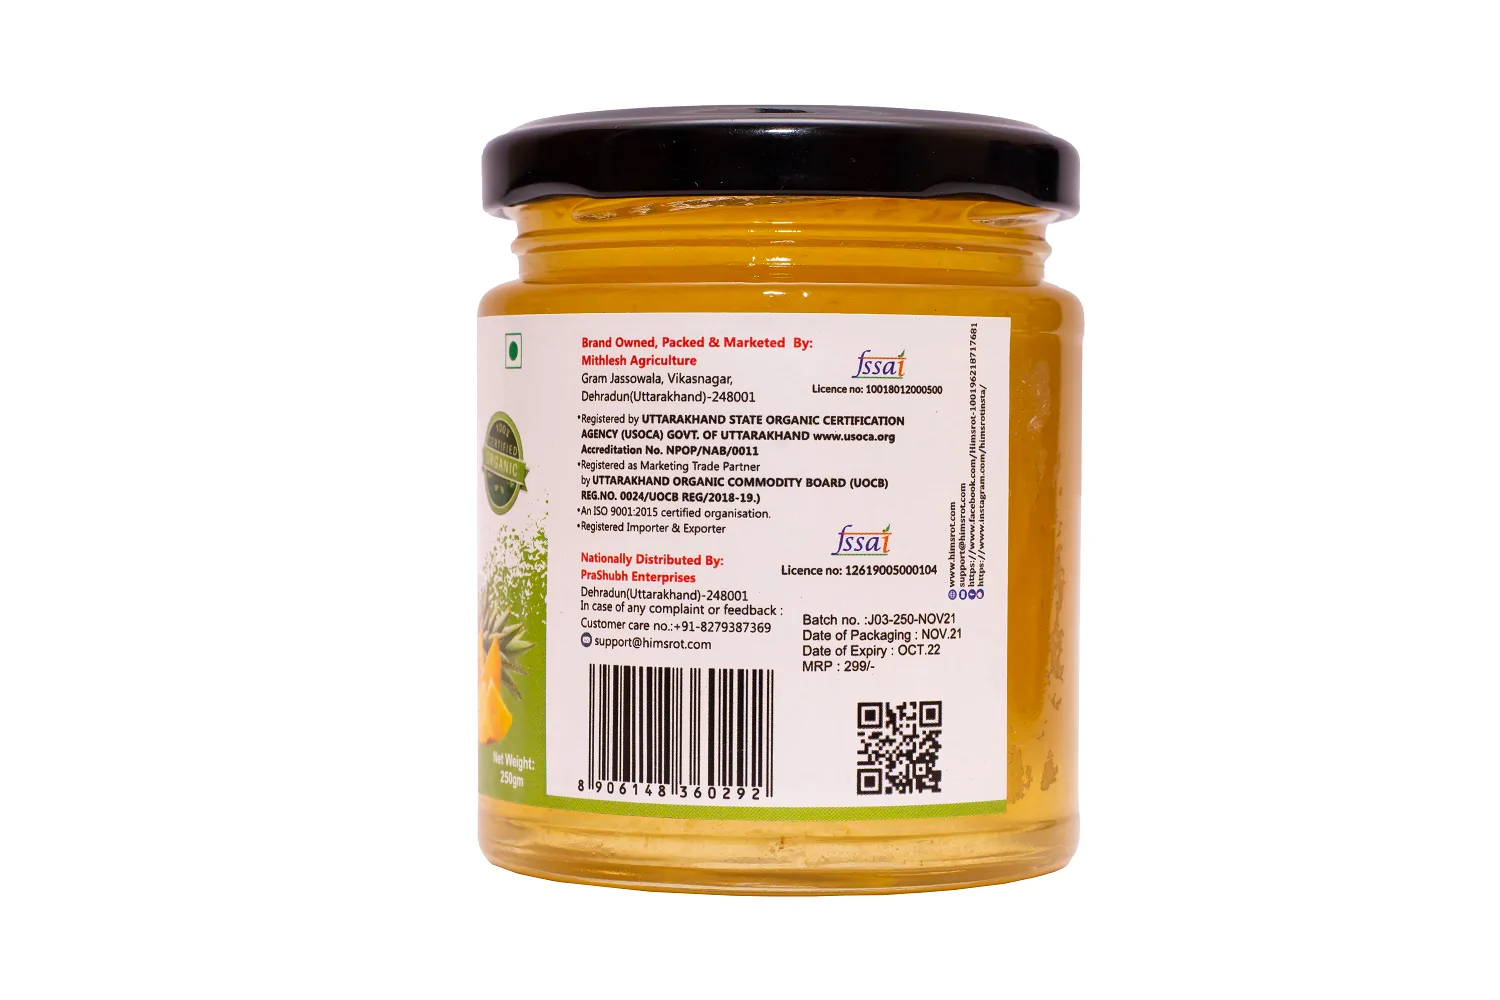 Buy Himsrot Organic PineApple Jam, Pineapple Fruit Jam Real Fruit Bread Jam, Healthy & Tasty, Fruit Jam Organic from Himalayas